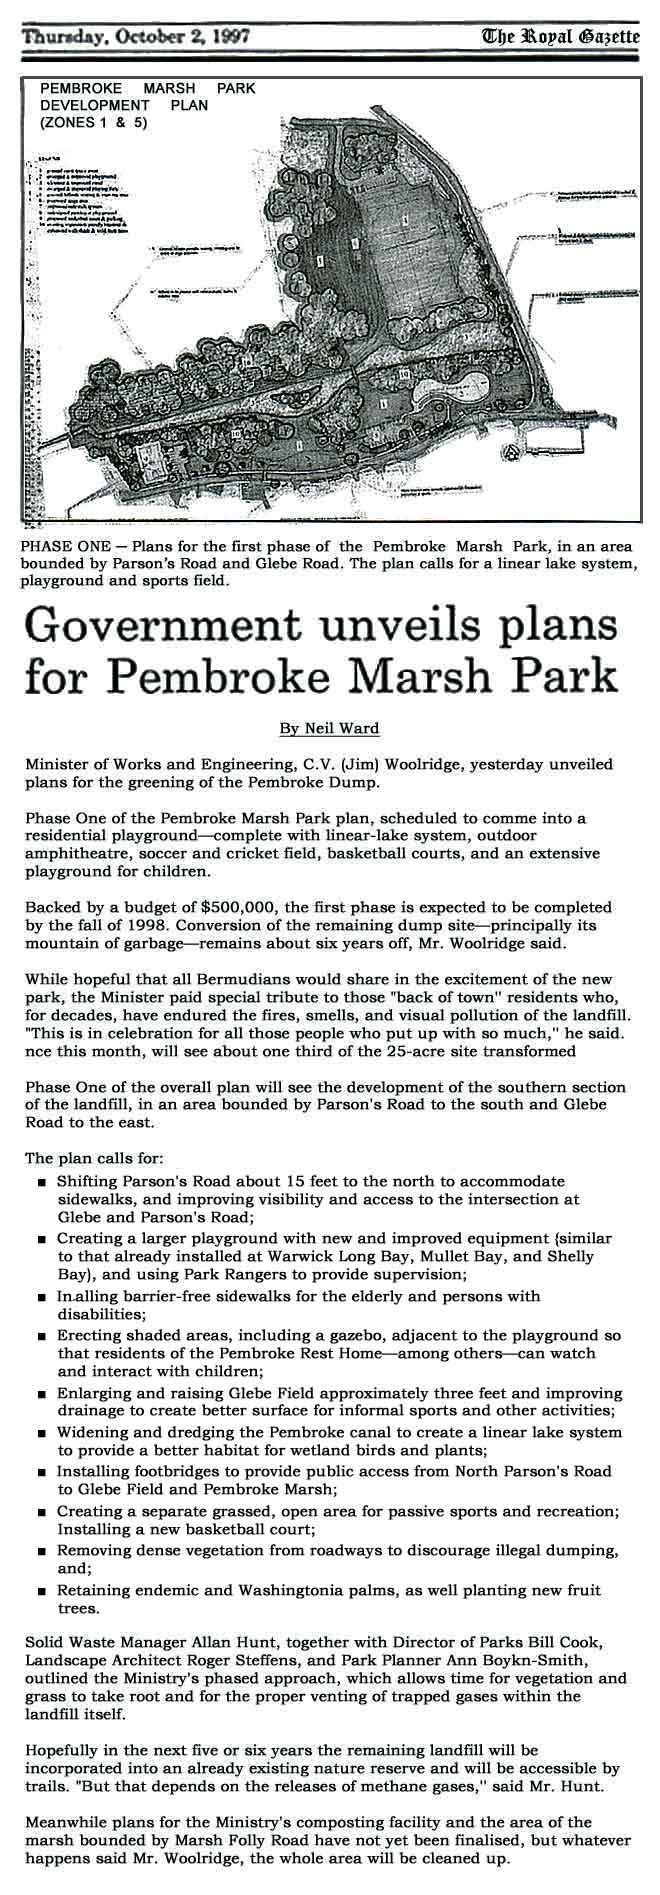 Pembroke Marsh Park, Bermuda. Roger Steffens, Landscape Architect.